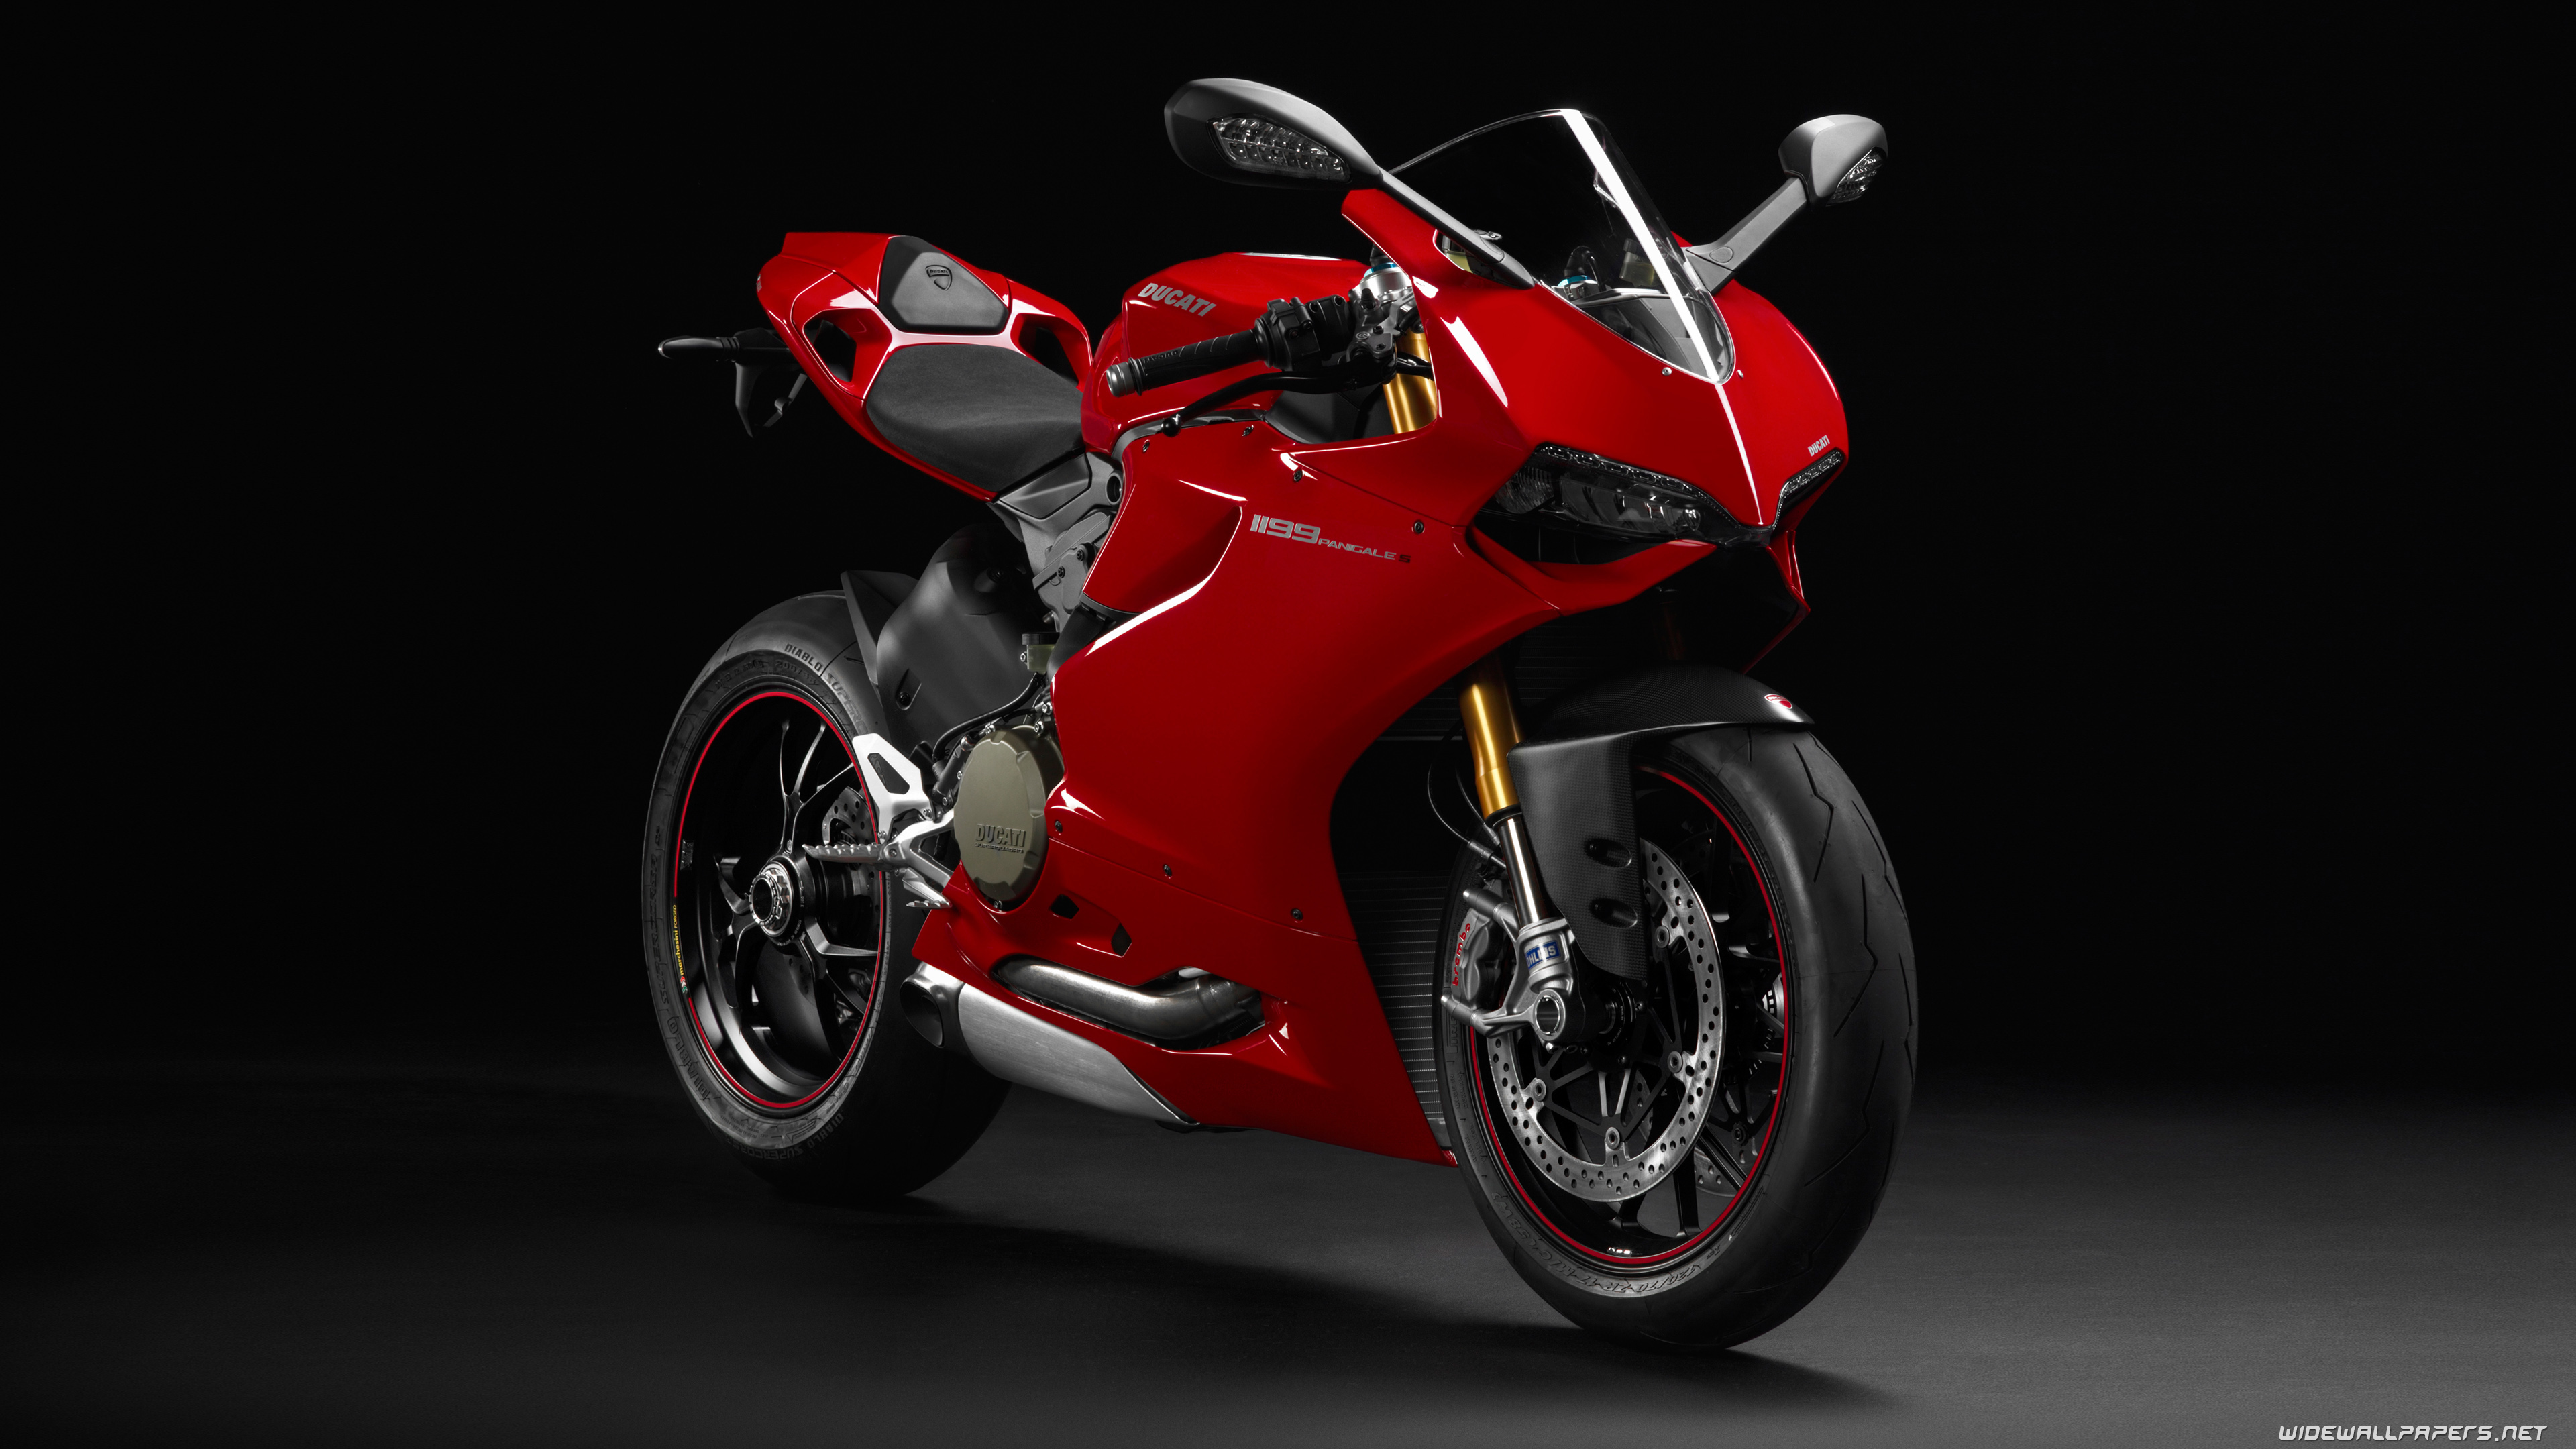 Ducati Superbike 1199 Panigale motorcycle desktop 3840x2160